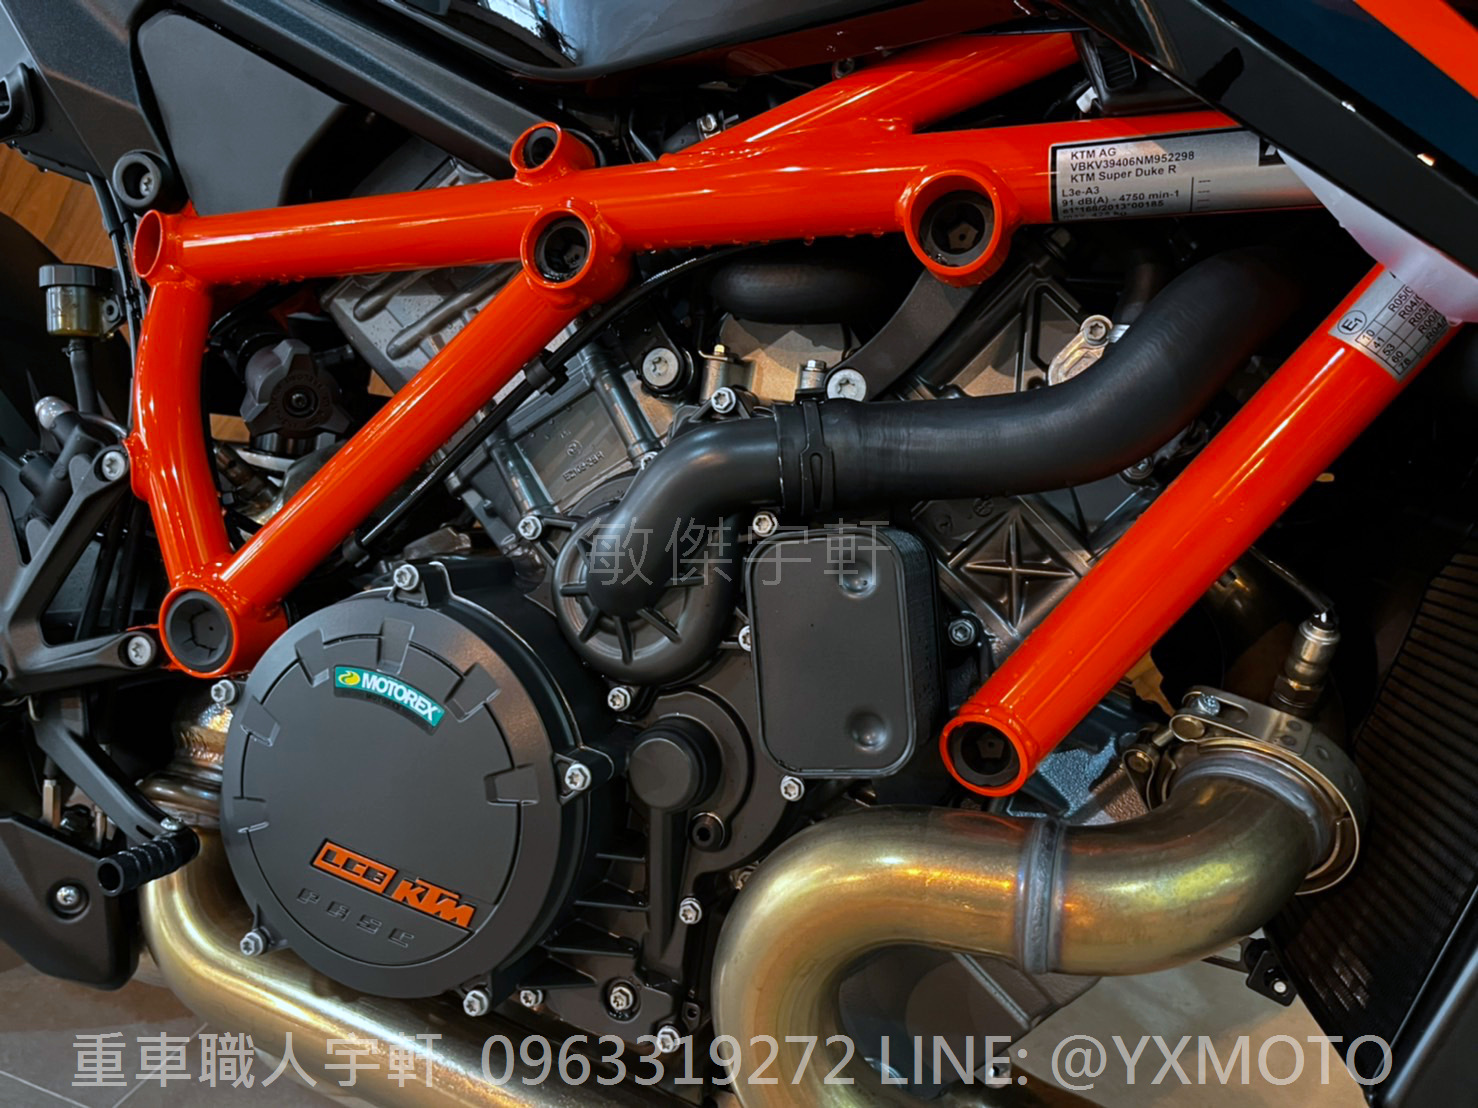 KTM 1290 SUPER DUKE R [Super Duke R]新車出售中 【敏傑宇軒】2022 全新 KTM 1290 SUPER DUKE R 藍橘色 總代理公司車 | 重車銷售職人-宇軒 (敏傑)